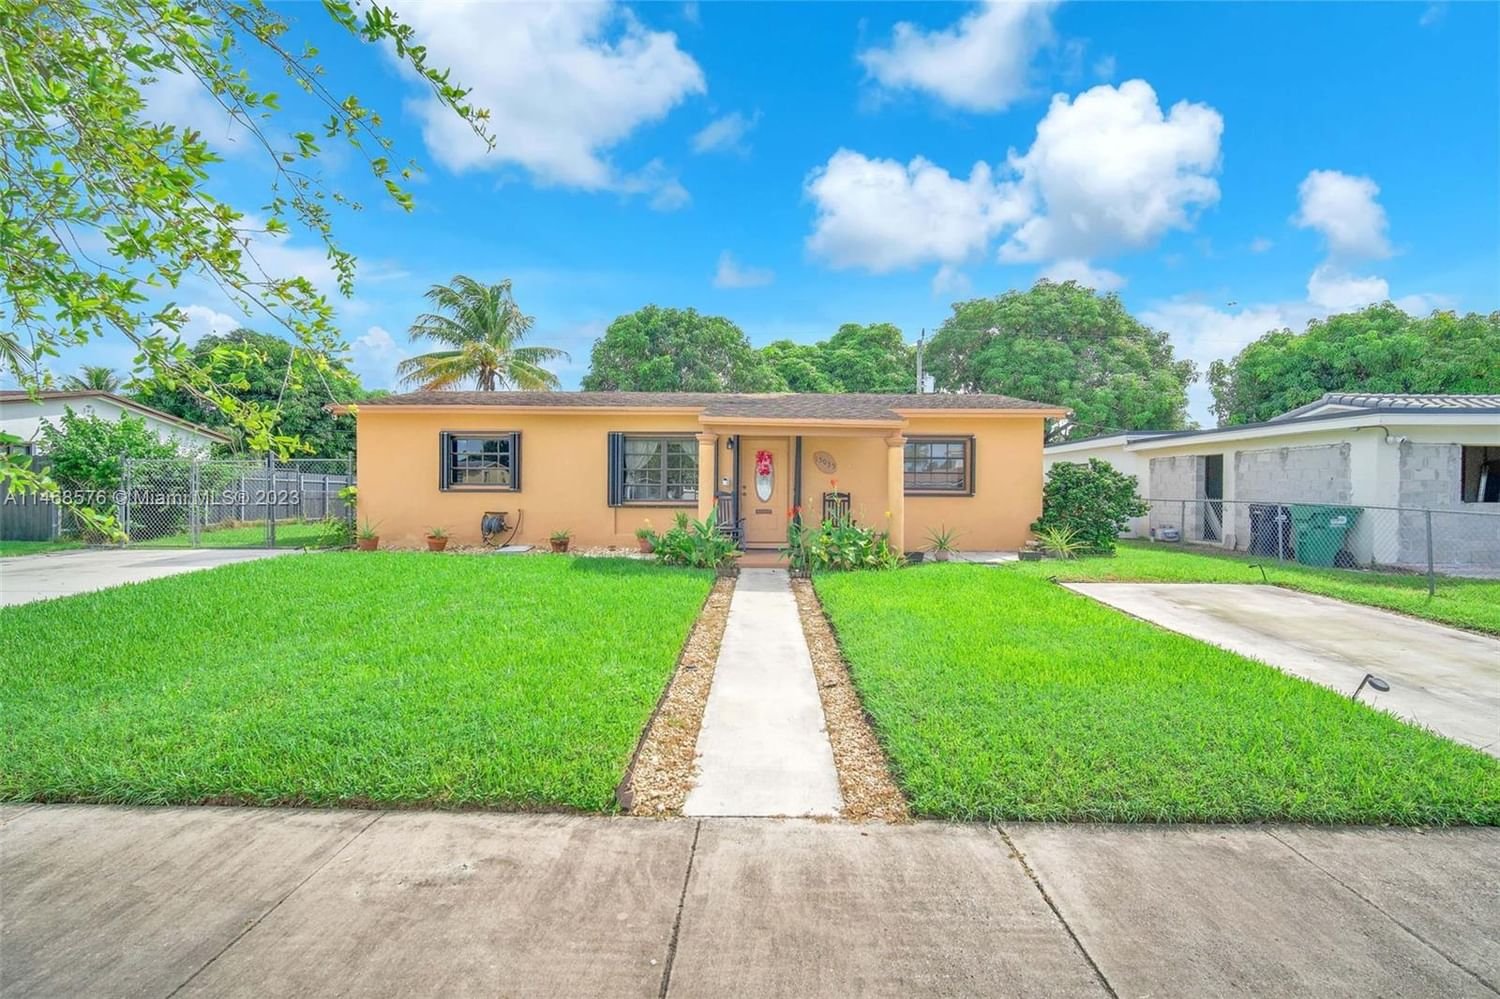 Real estate property located at 15035 Harrison St, Miami-Dade County, Miami, FL